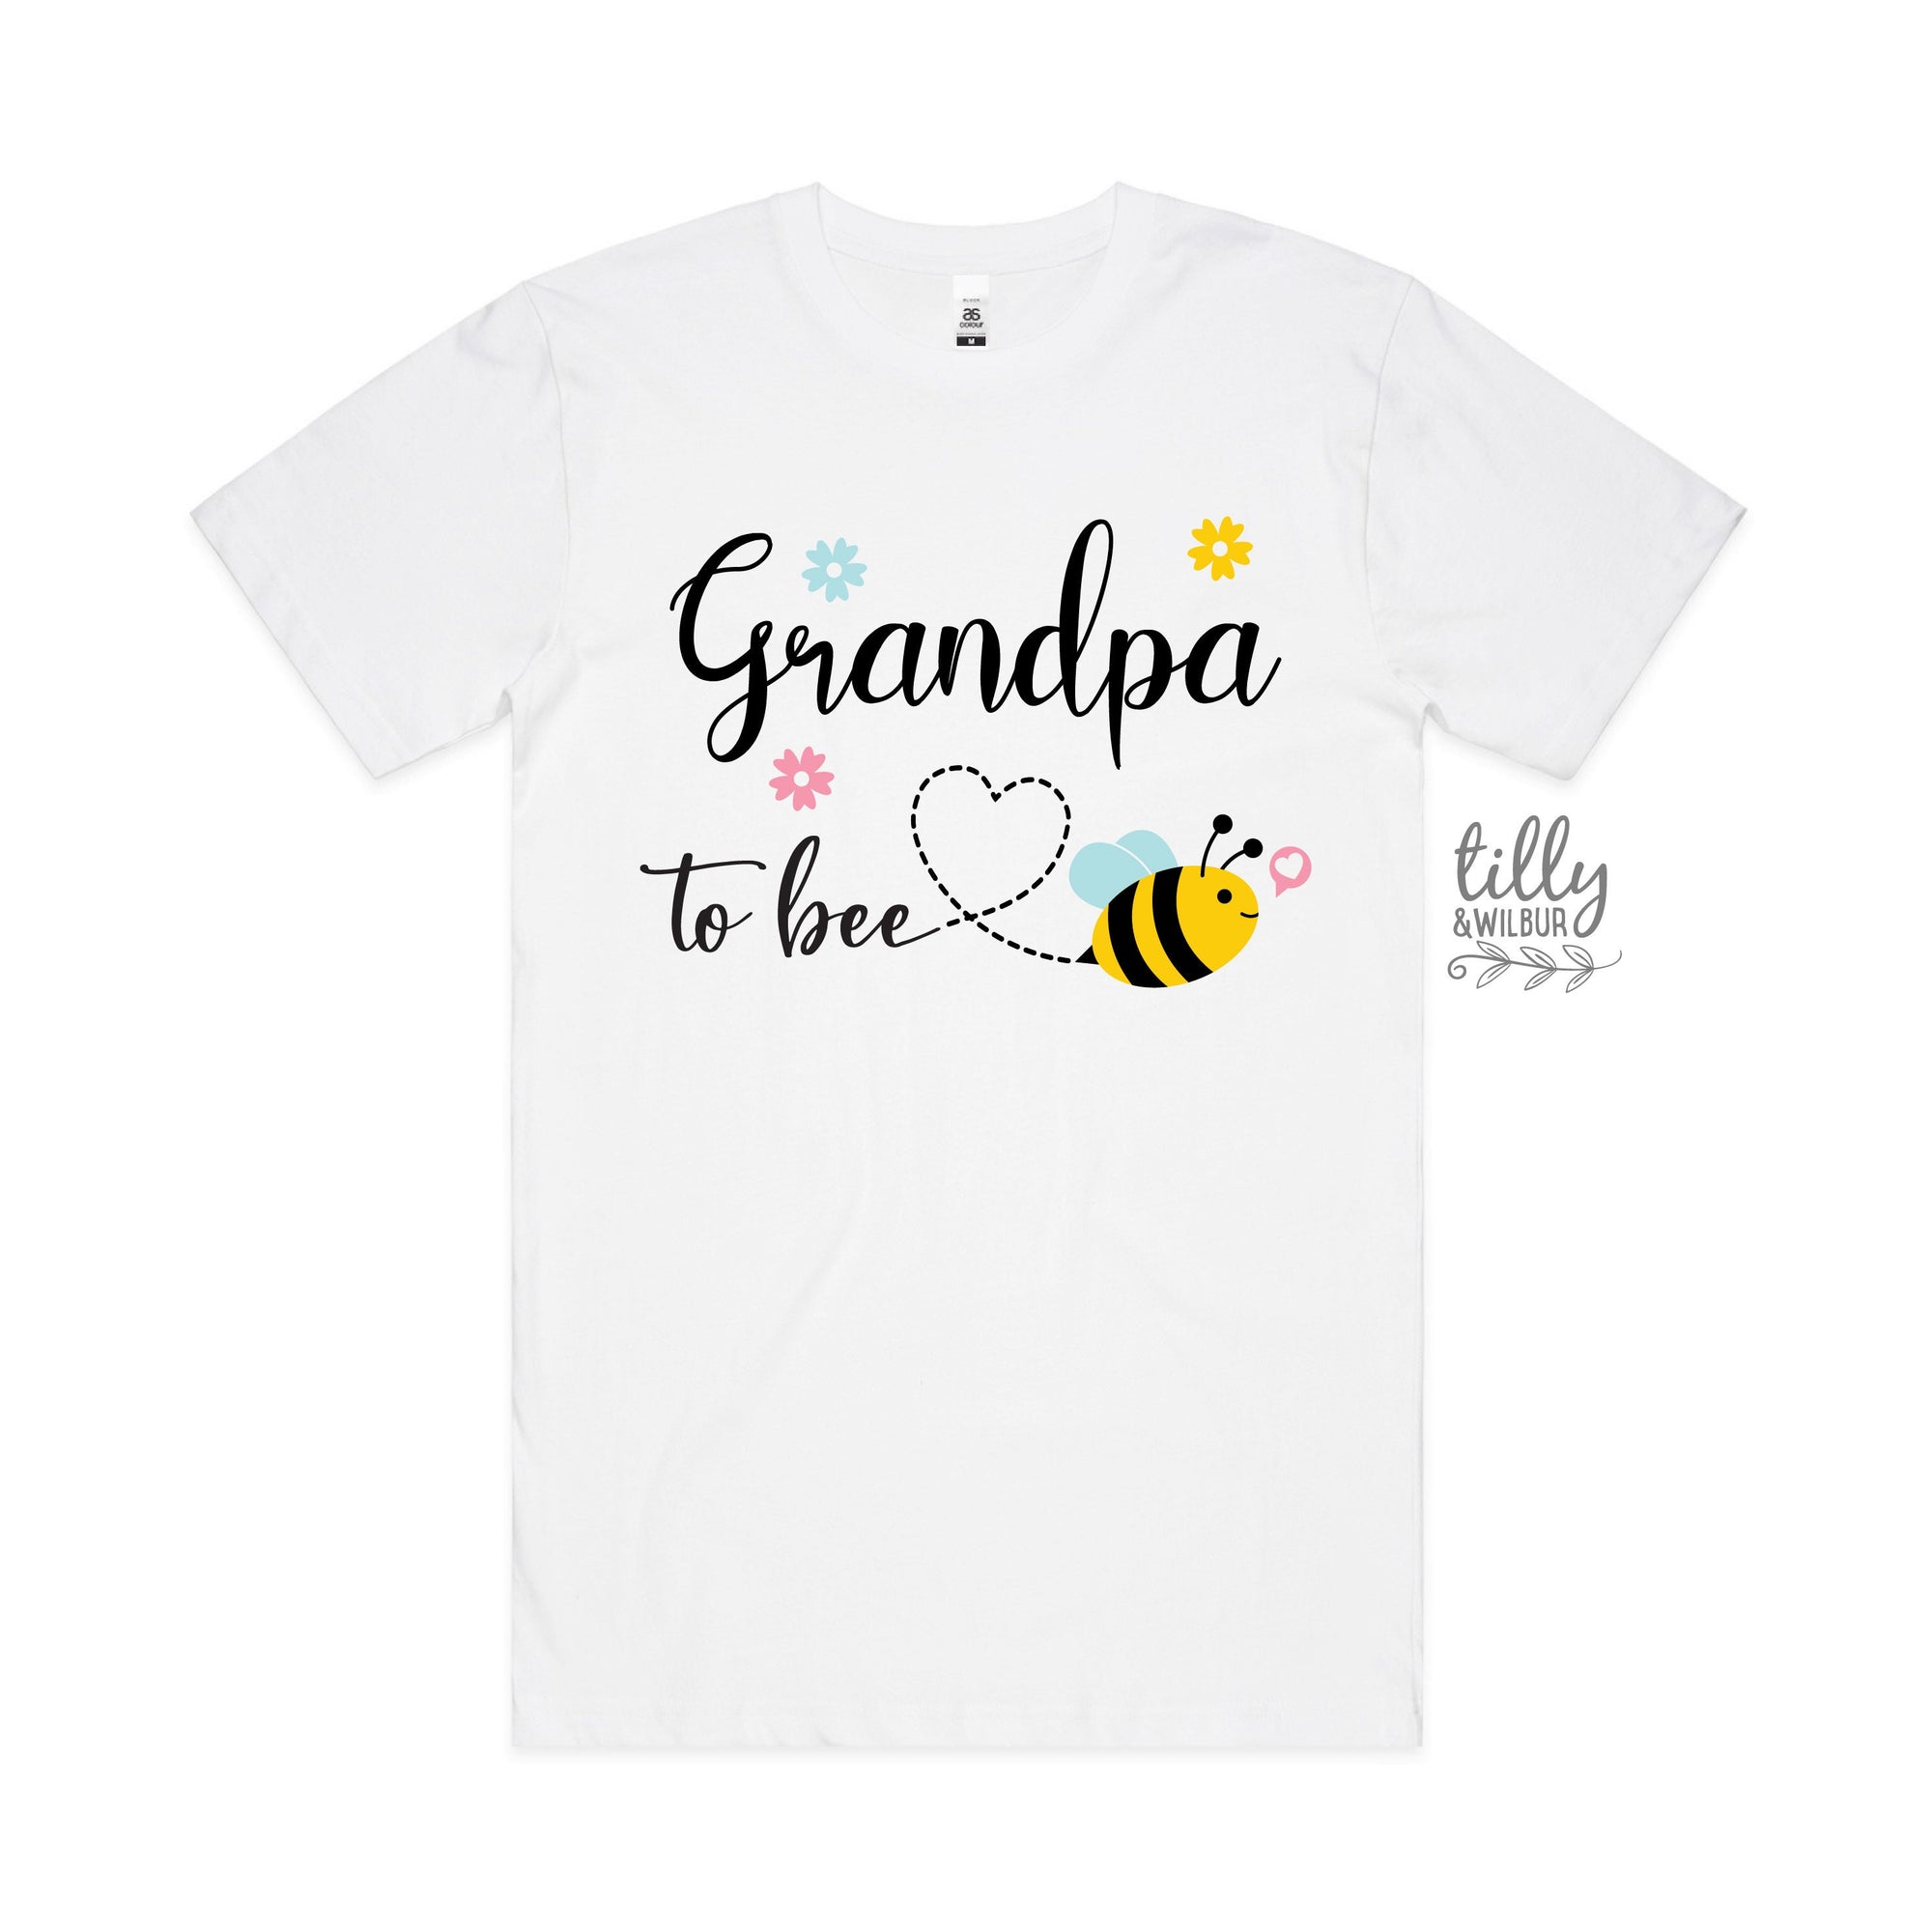 Grandpa To Bee T-Shirt, Grandpa To Be T-Shirt, Grandfather T-Shirt, Grandchild Gift, Pop, Grandparents Pregnancy Announcement, Grandad, Pa